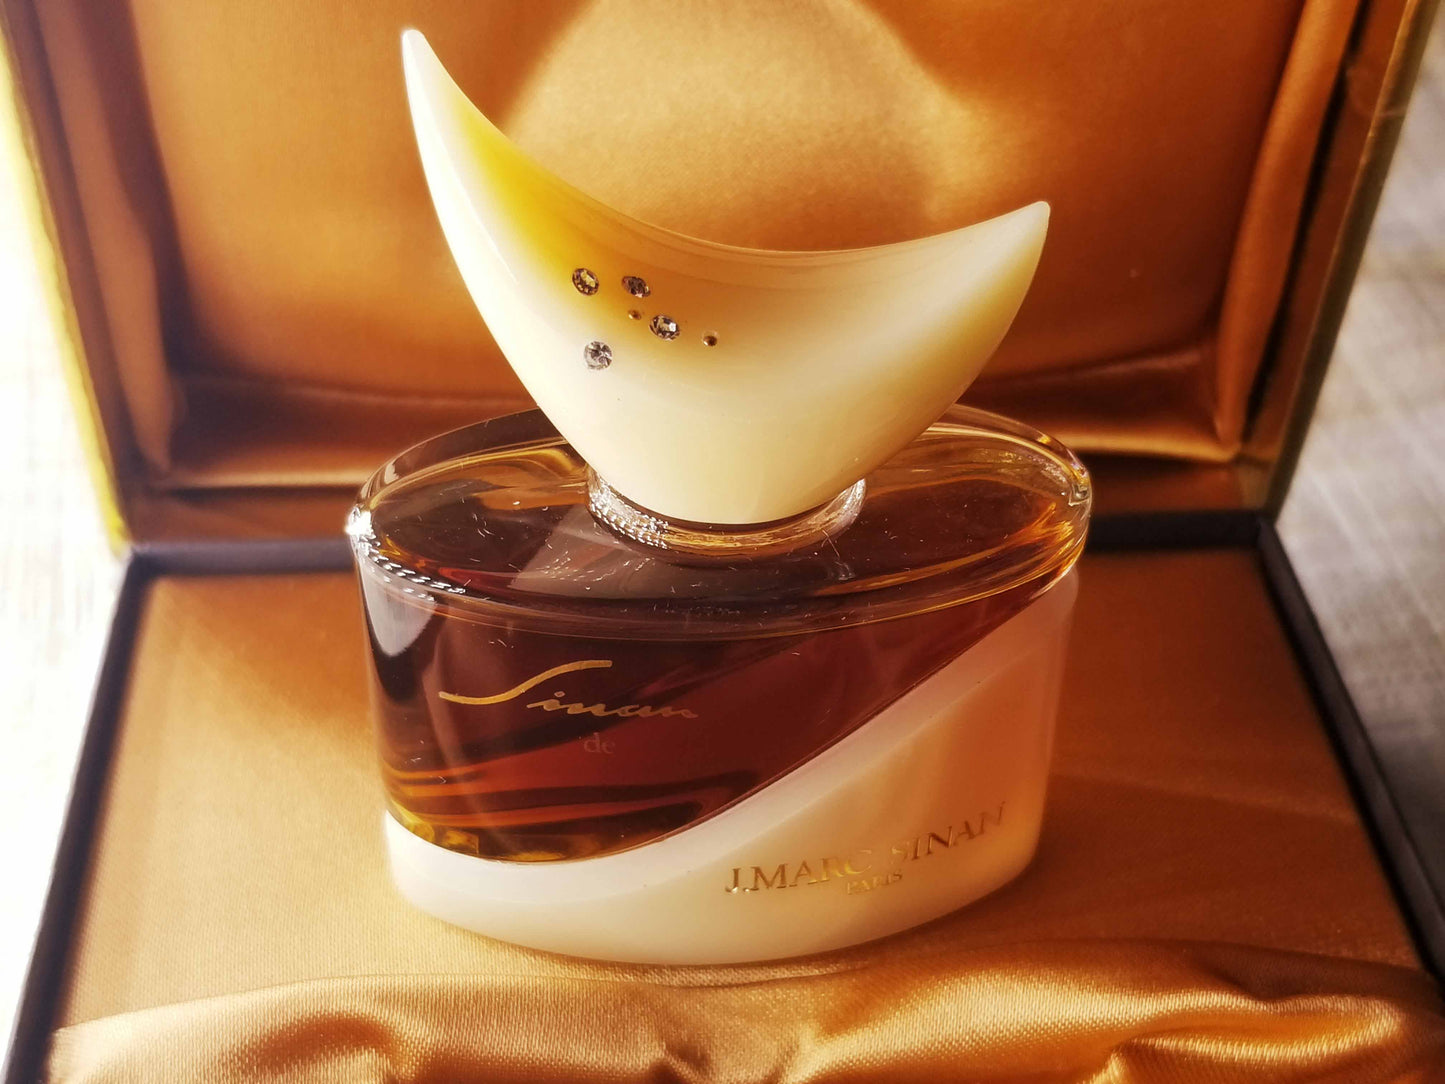 Sinan Jean-Marc Sinan for women Pure Parfum Splash 30 ml 1 oz Or 15 ml 1/2 oz OR 7.5 ml 1/4 oz, Vintage, Rare